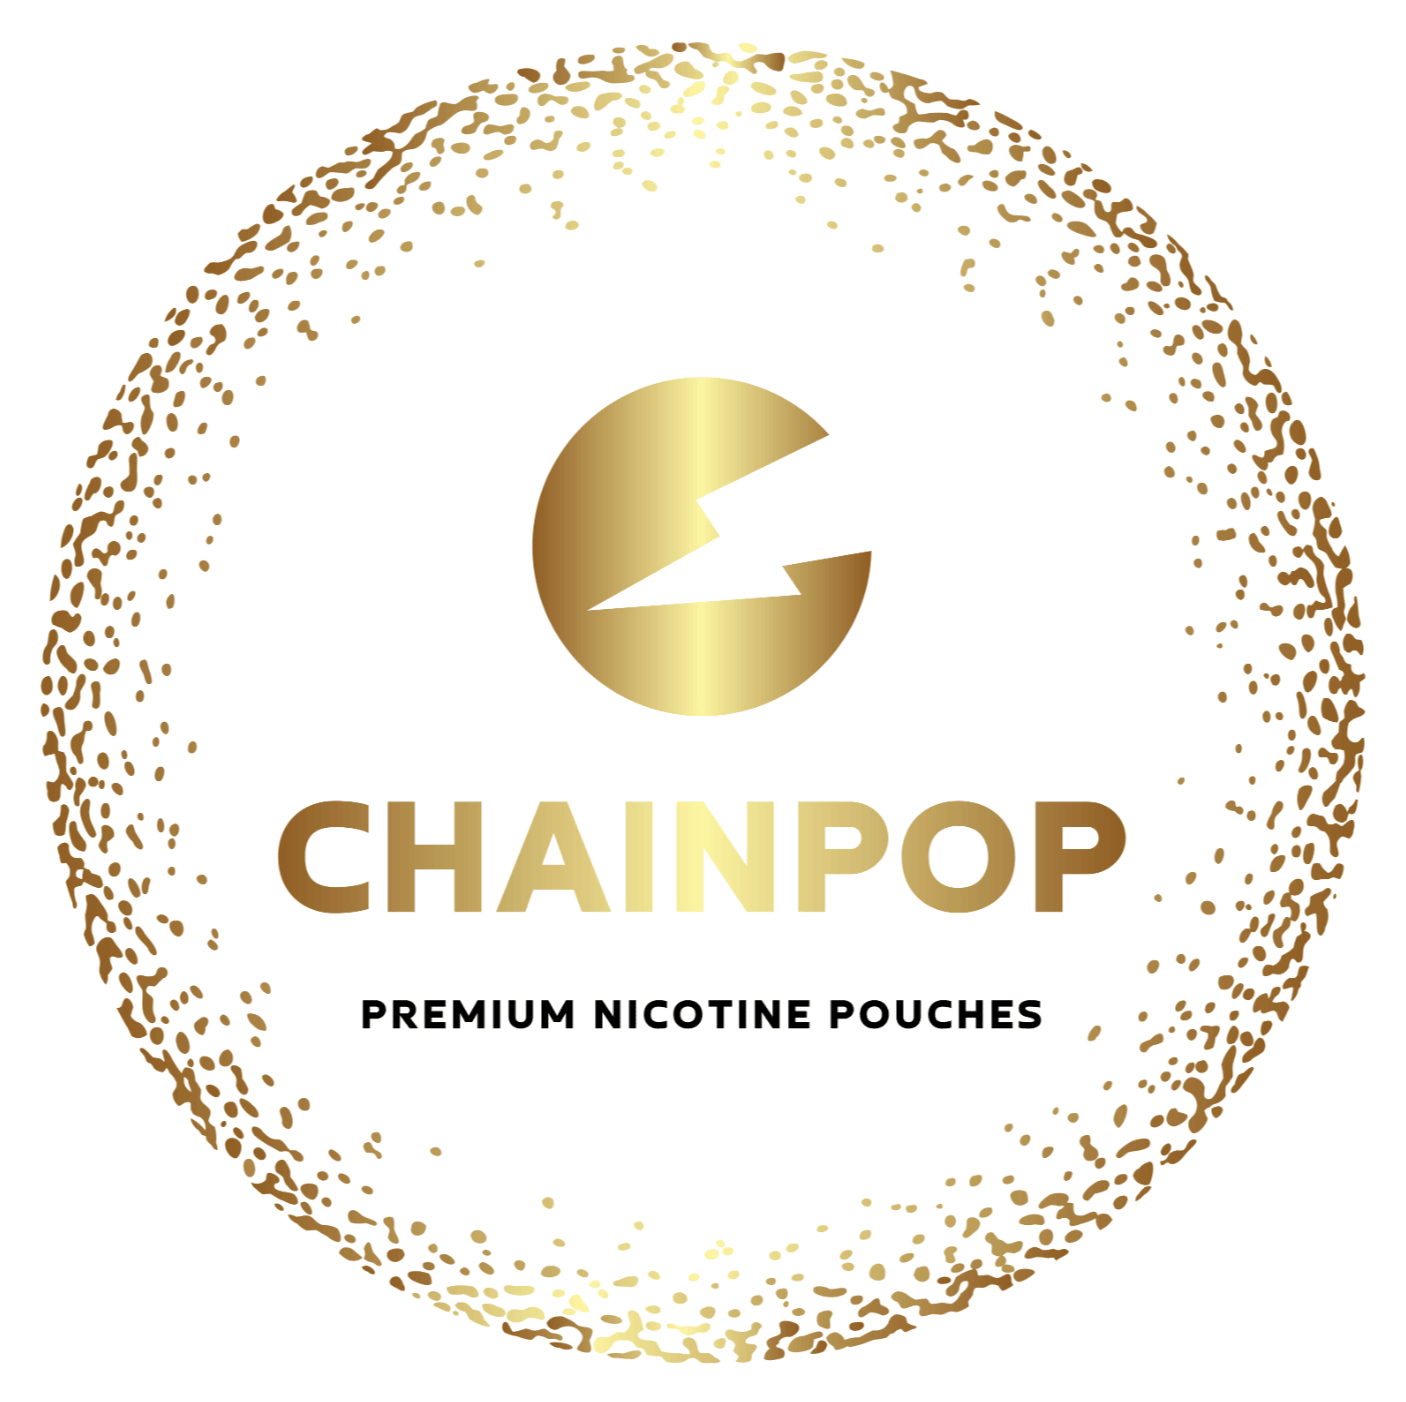 Chainpop Nikotinpåsar logo